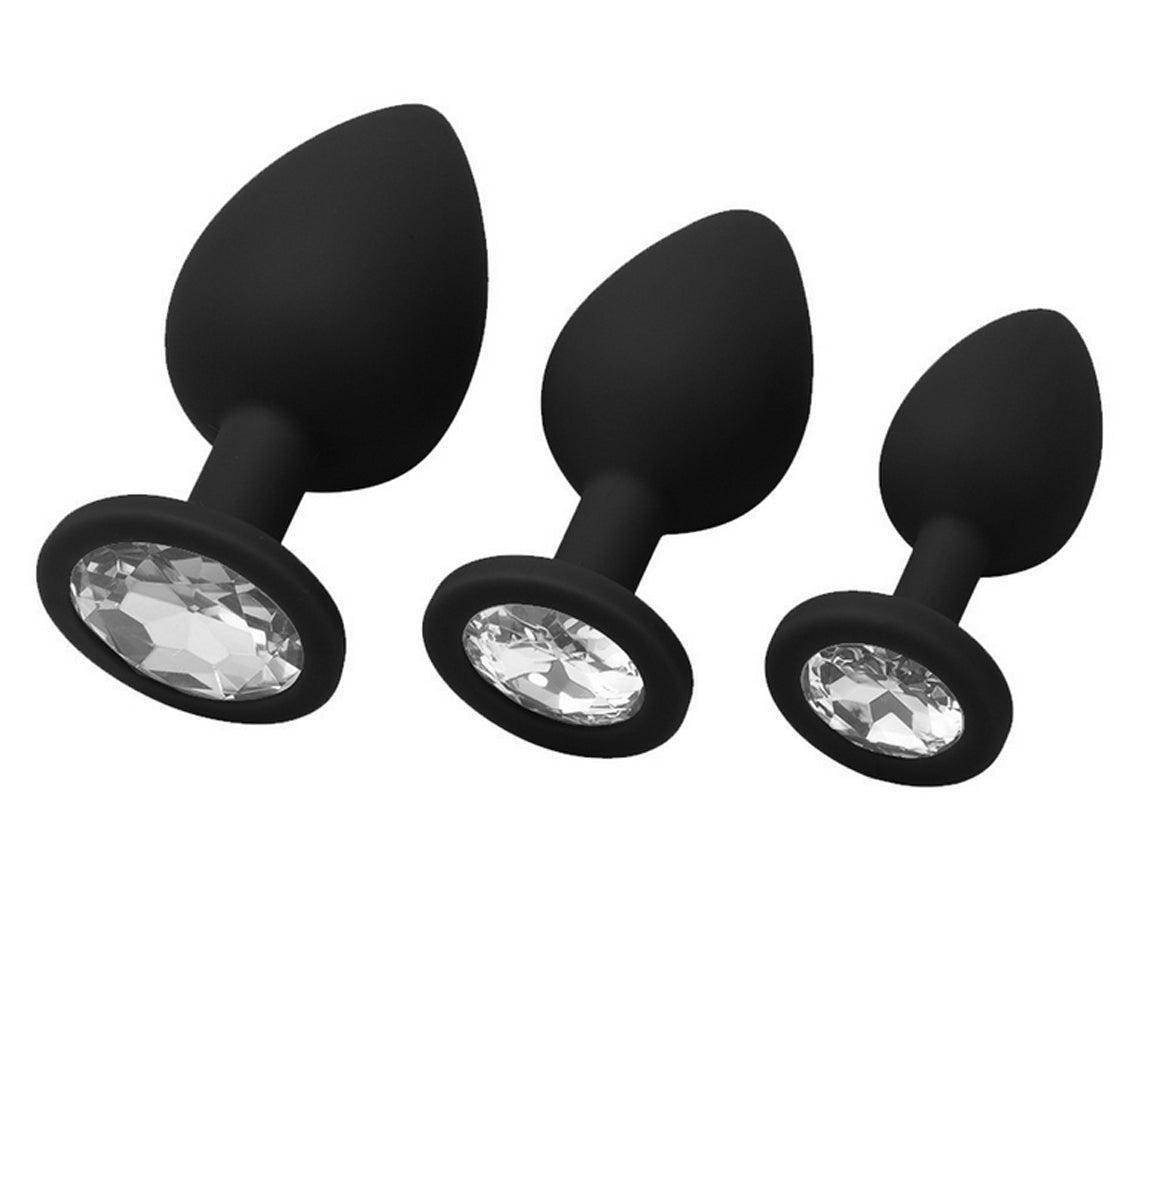 TPFSecret Juwel anal plug set of 3 - with gemstone silver - silicone black or red